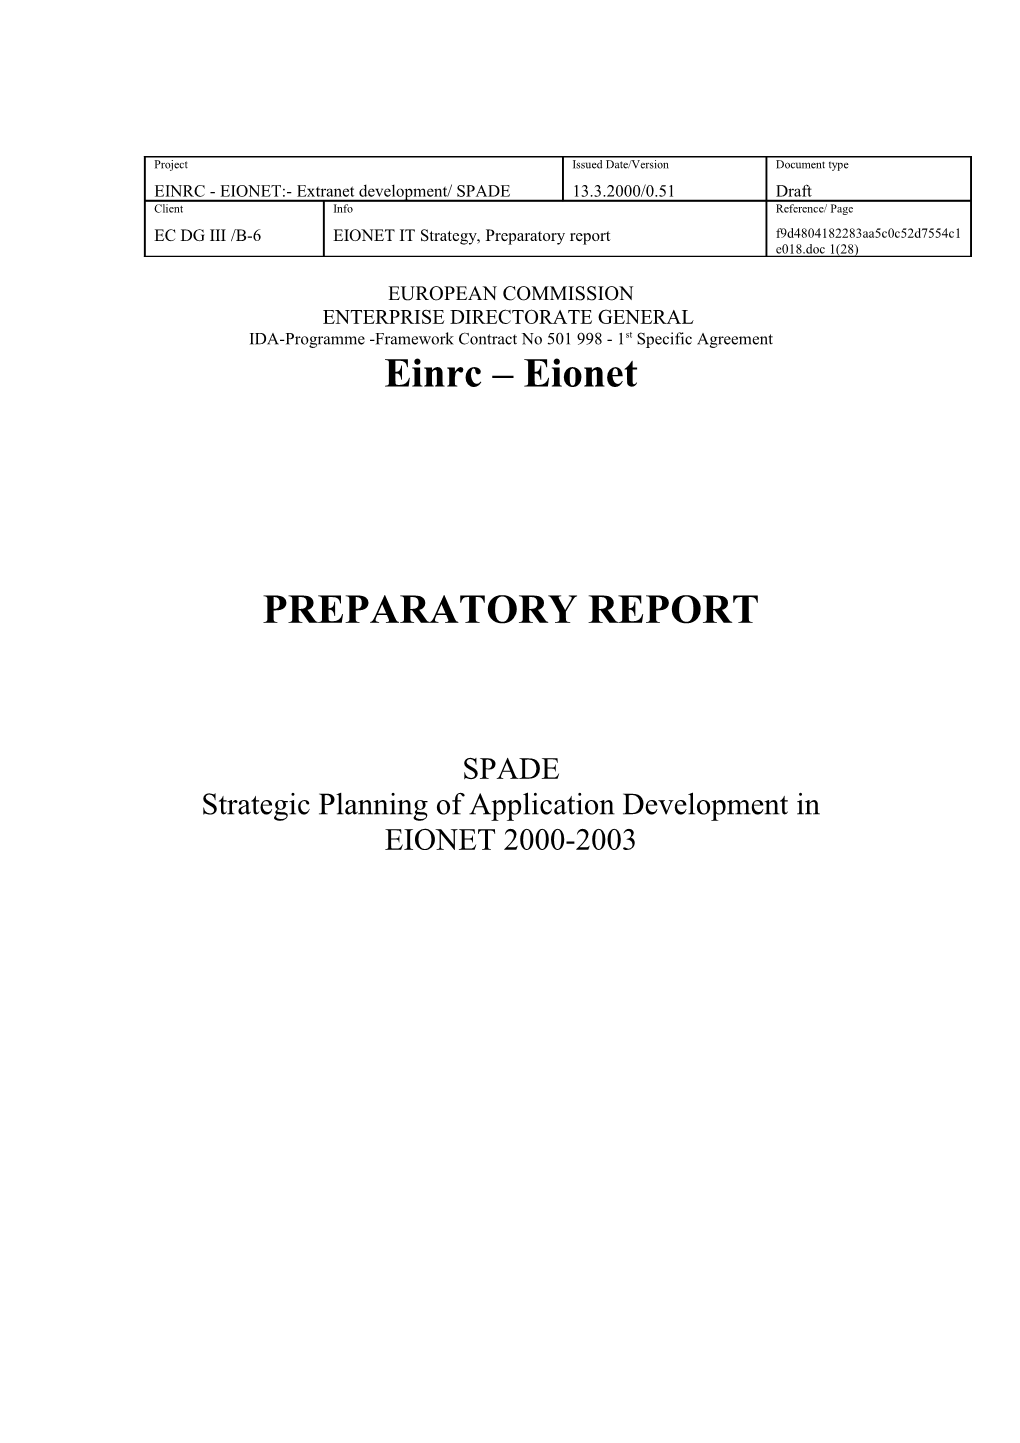 Strategic Plan for Application Development in EIONET 2000-2003